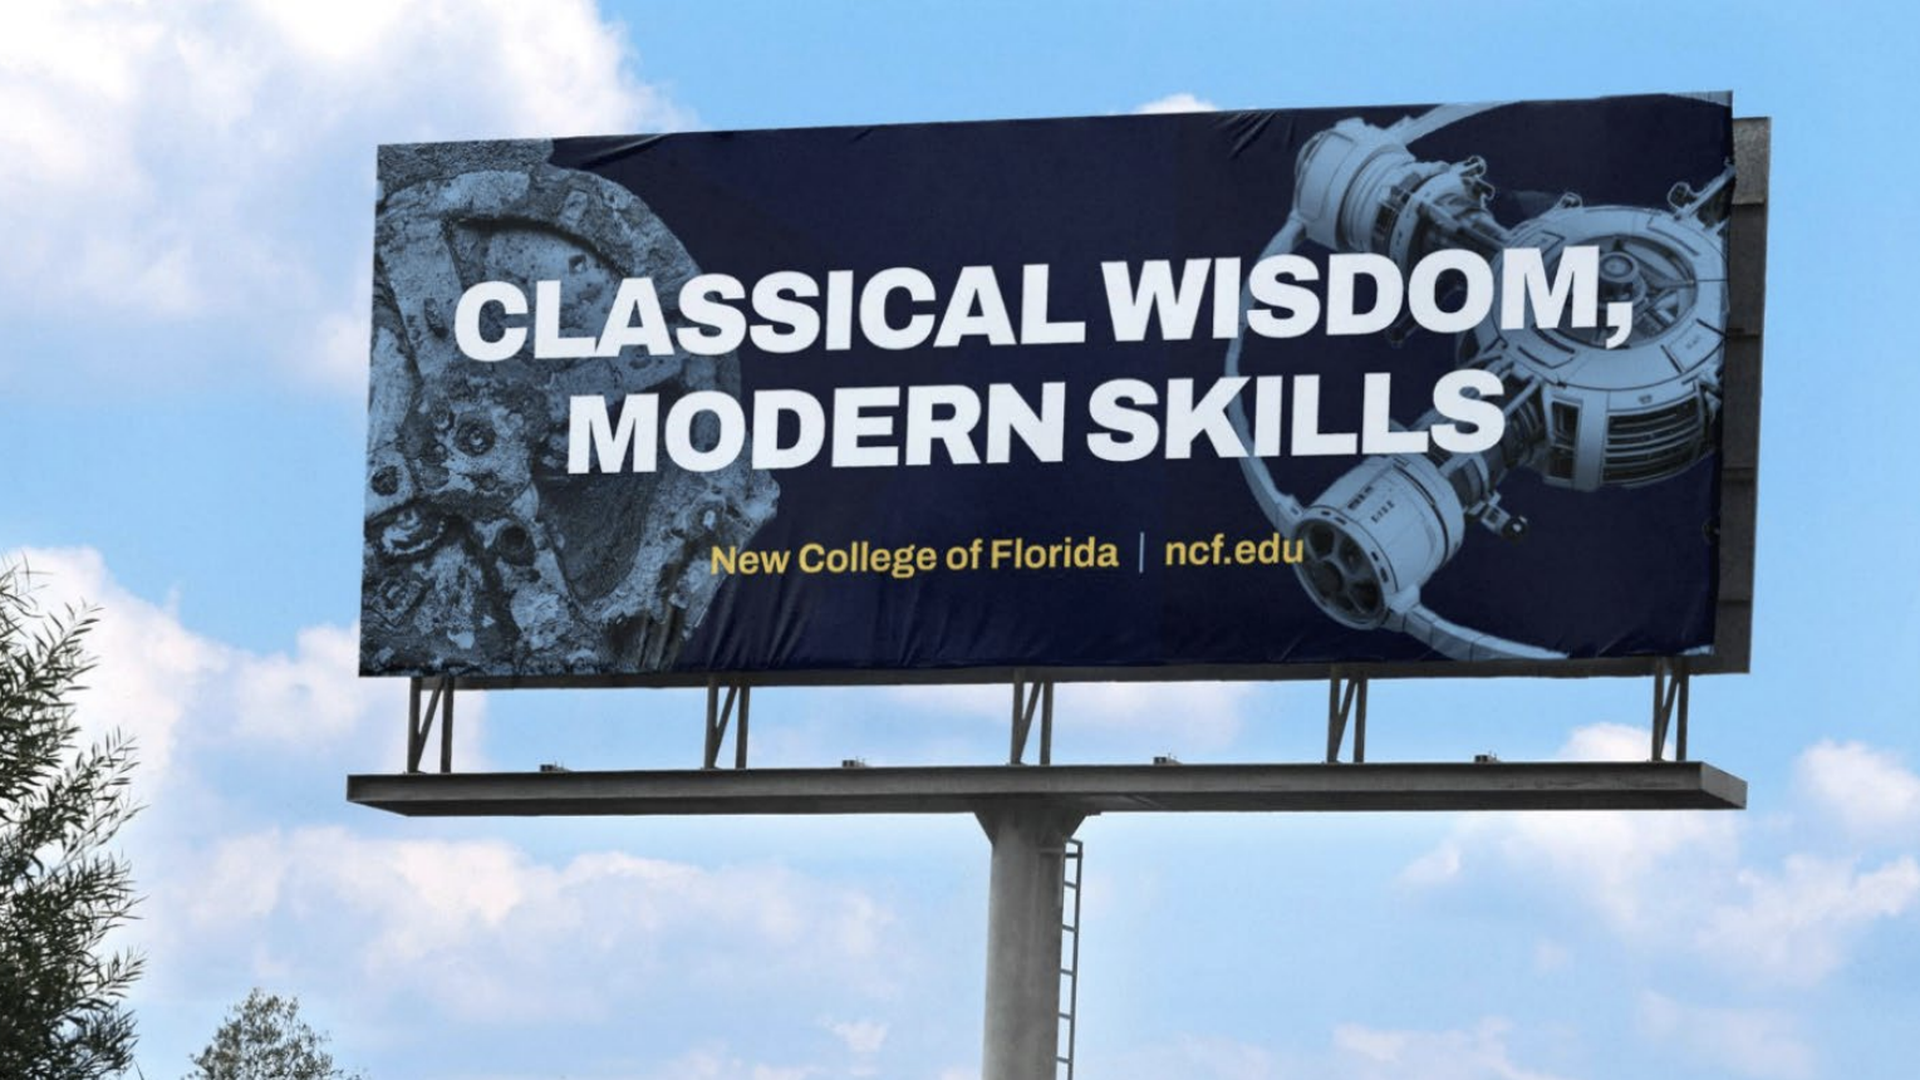 A navy billboard that reads: "CLASSICAL WISDOM, MODERN SKILLS New College of Florida | ncf.edu"